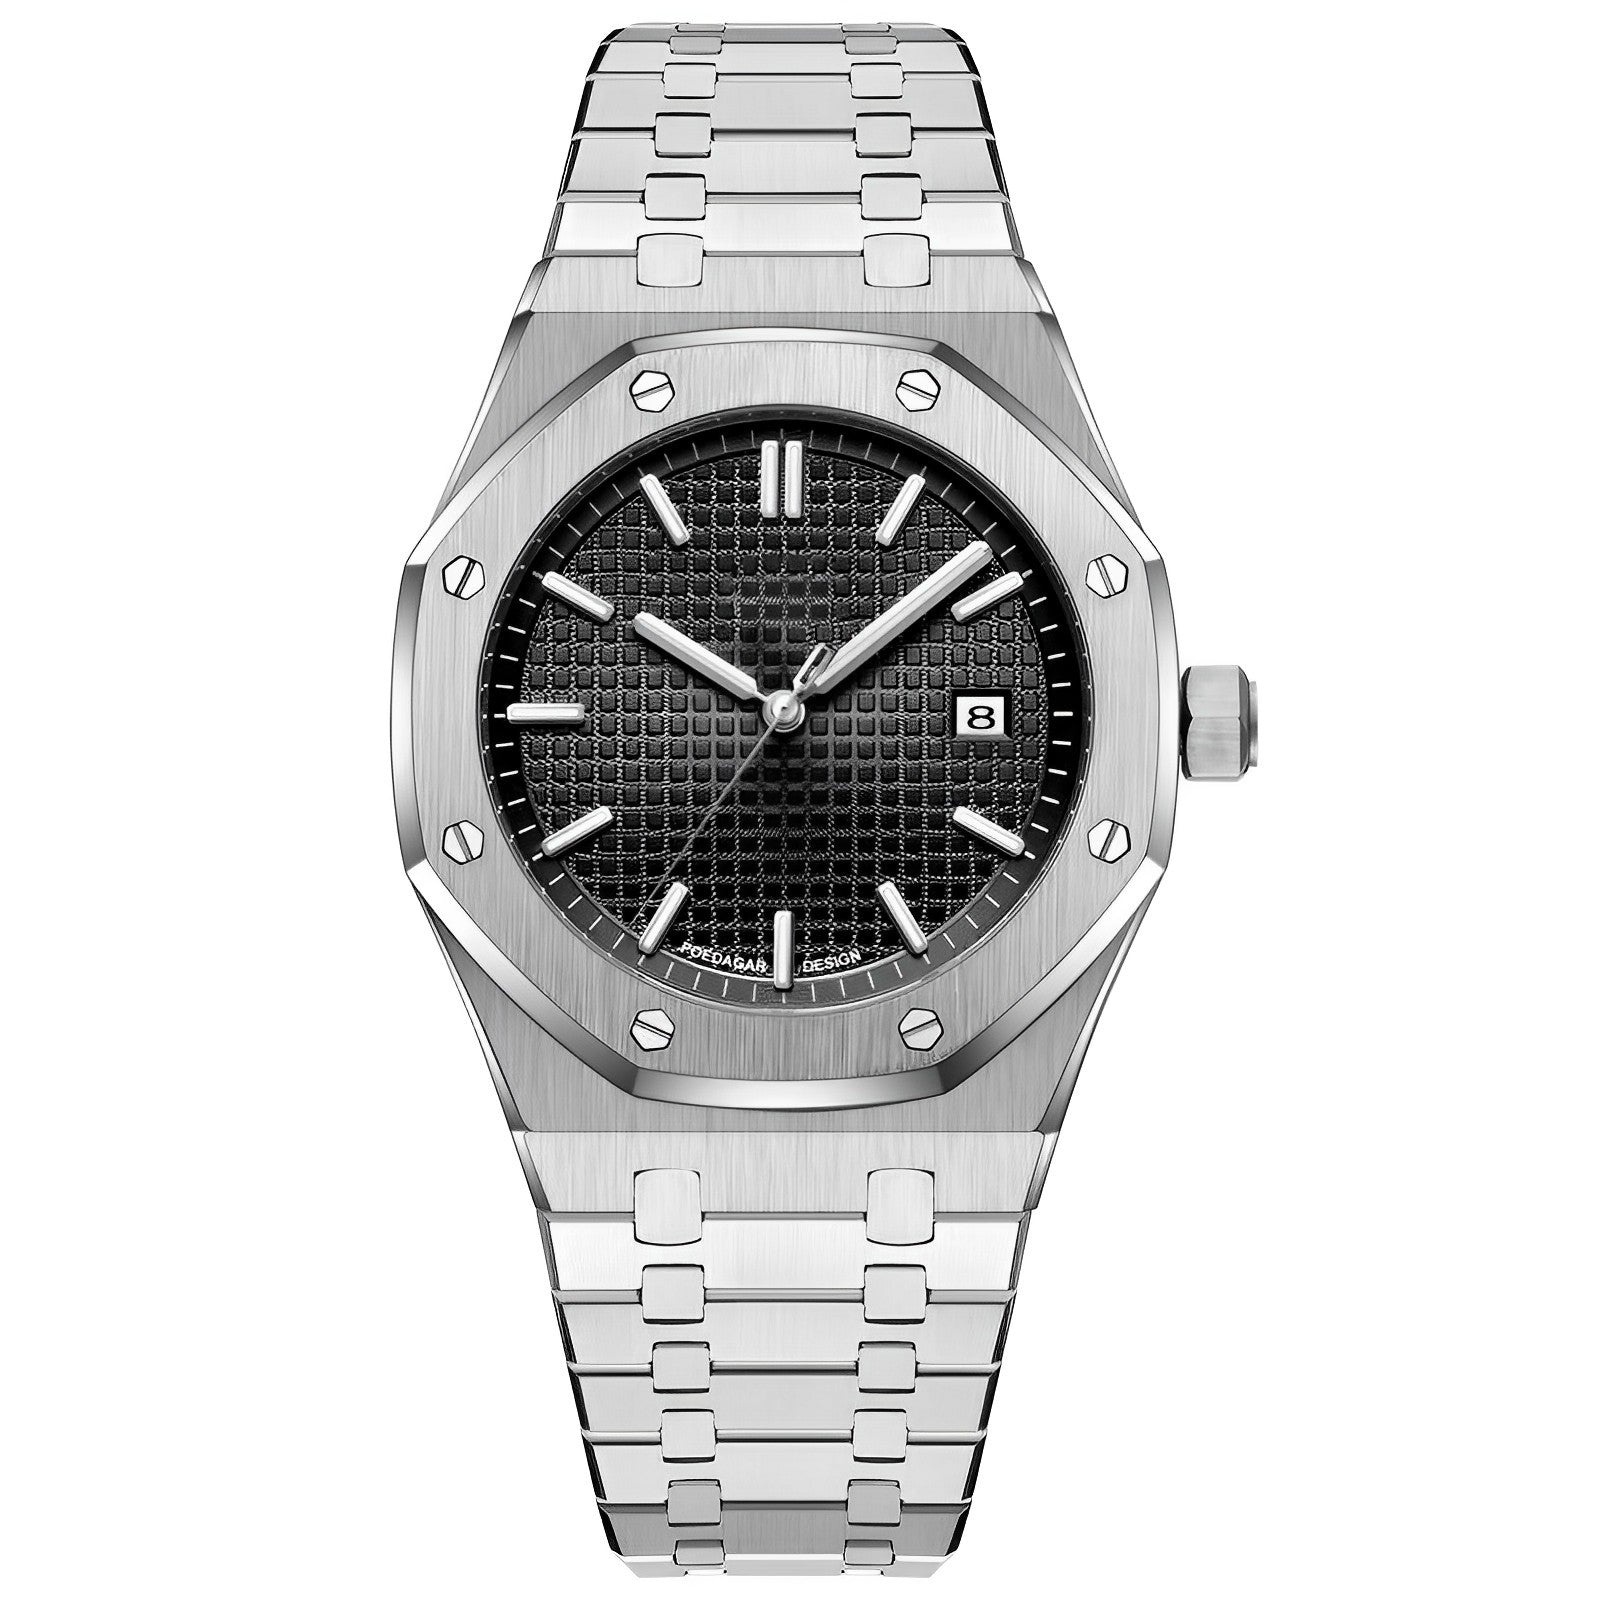 Eclipse Silver Watches for Men | Mercari